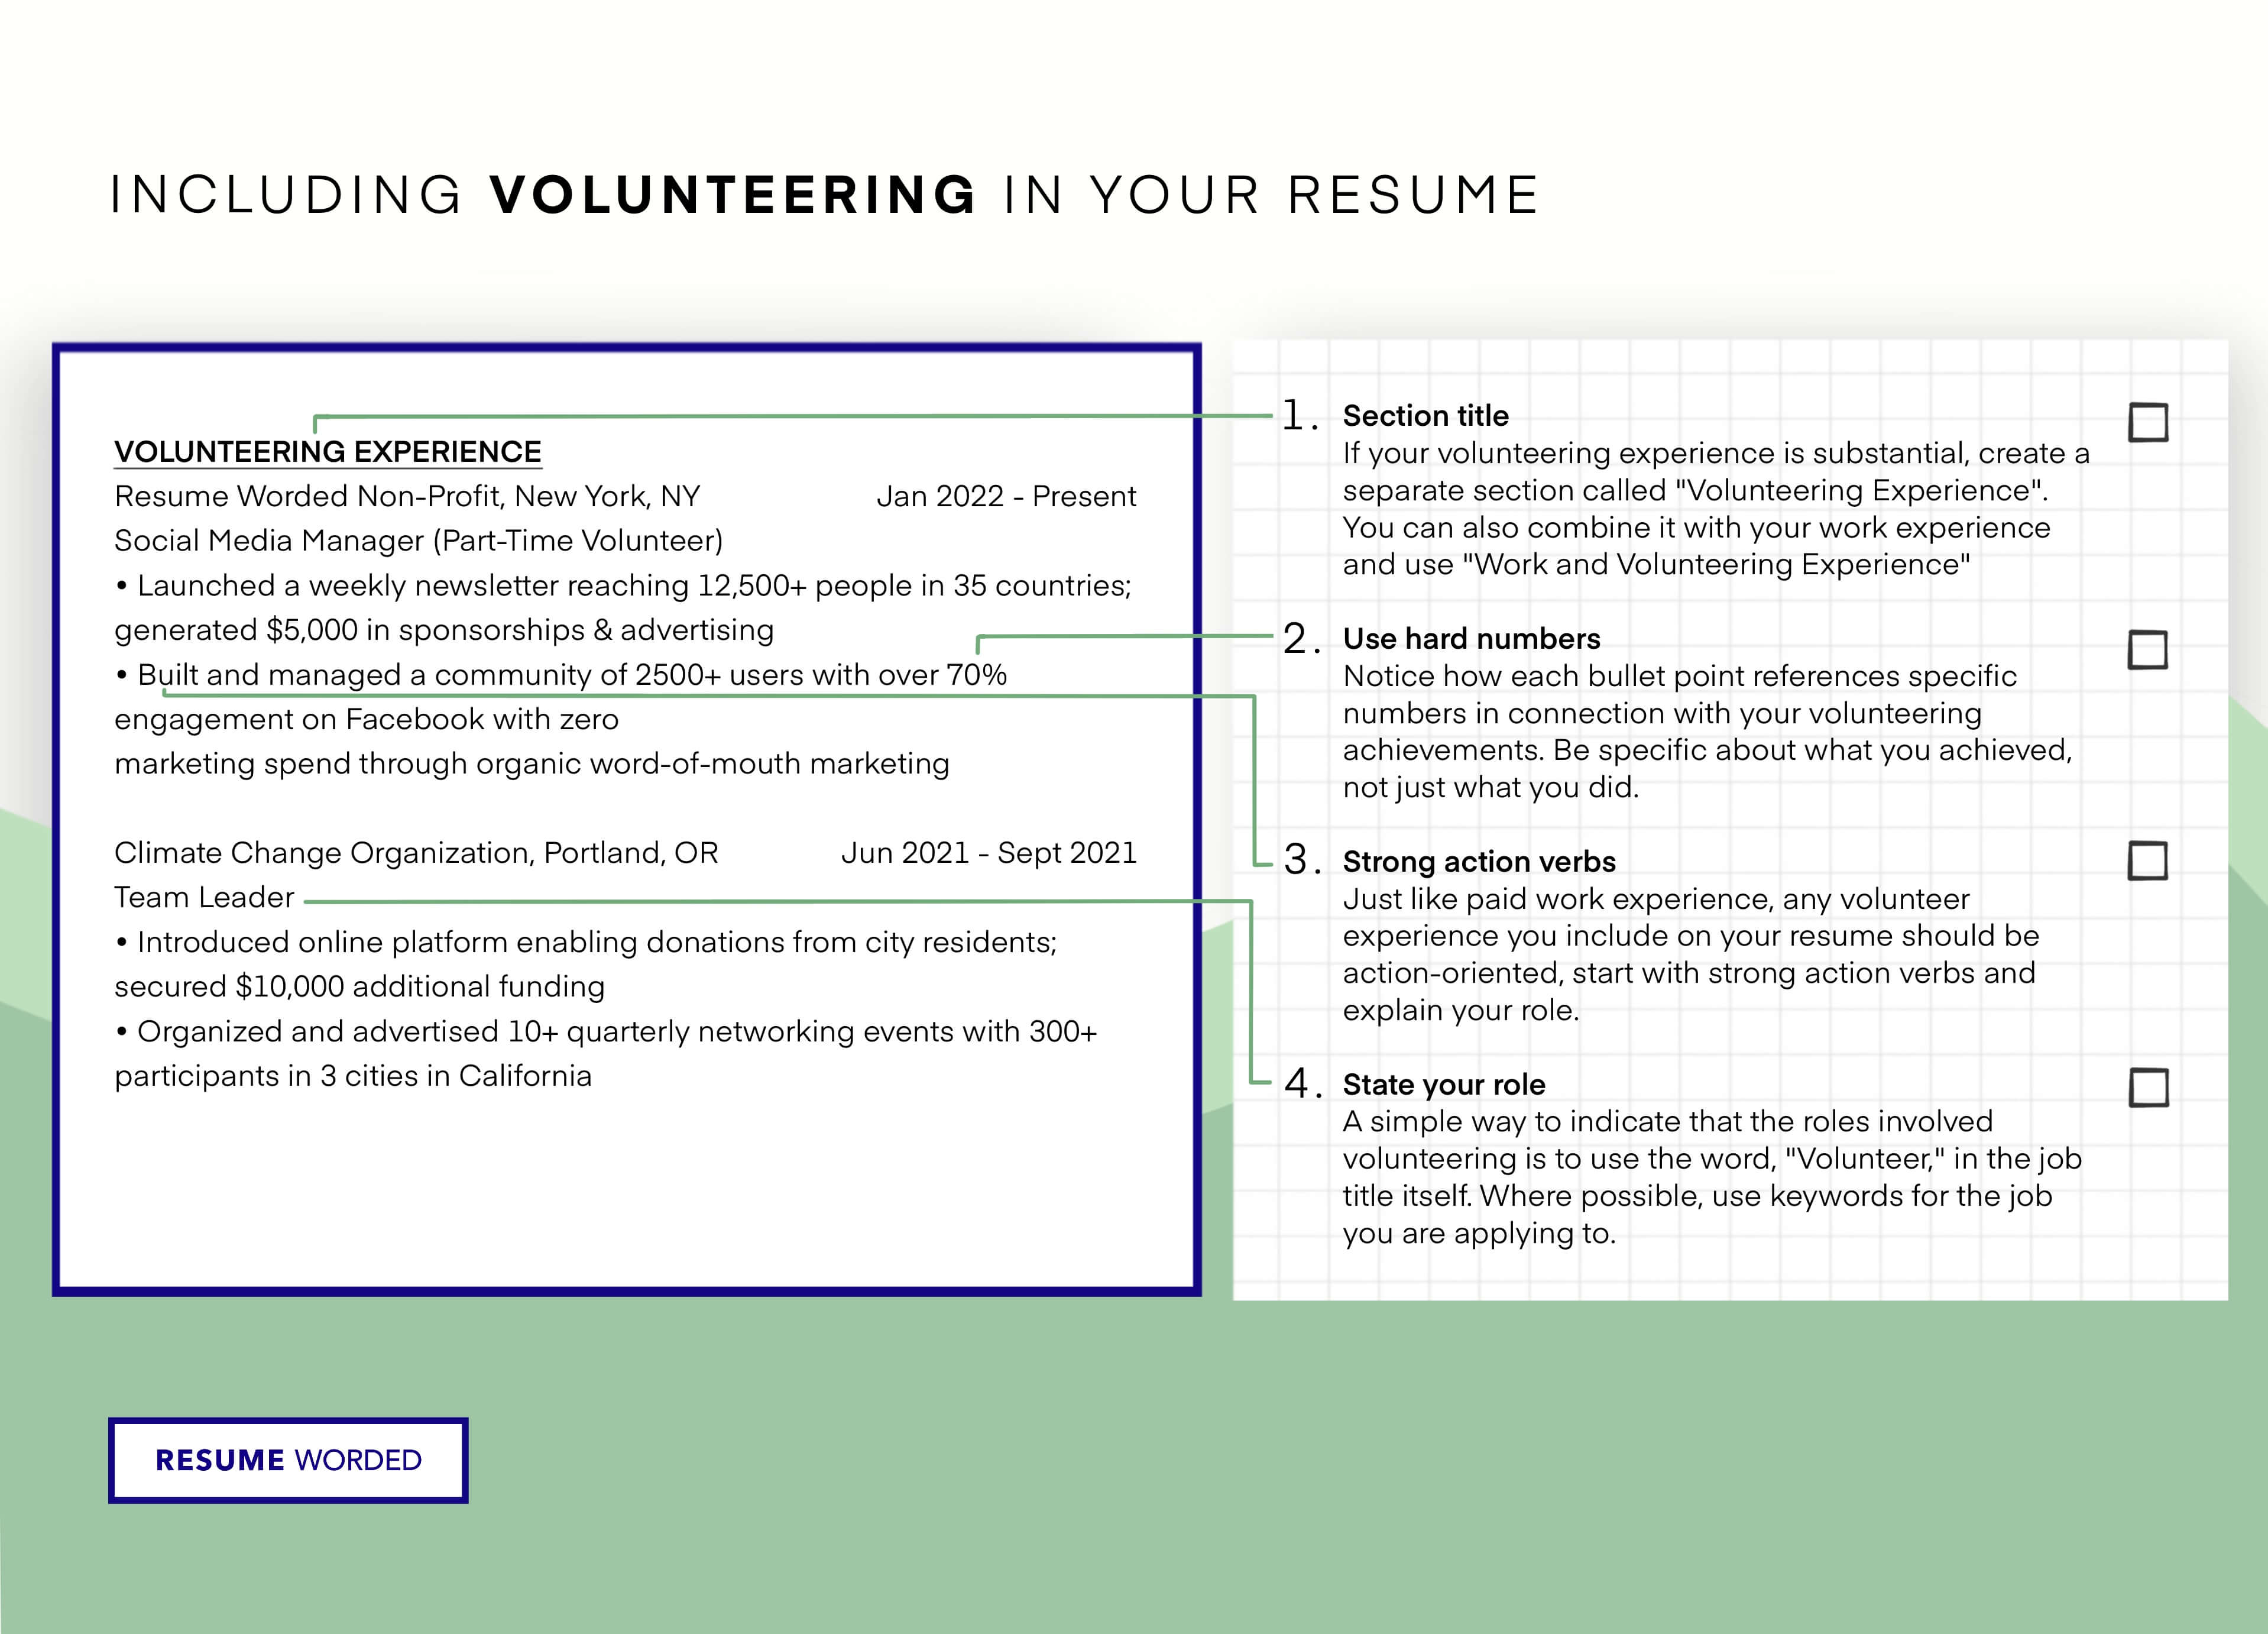 Include volunteering experience. - Entry Level Industrial Engineer Resume